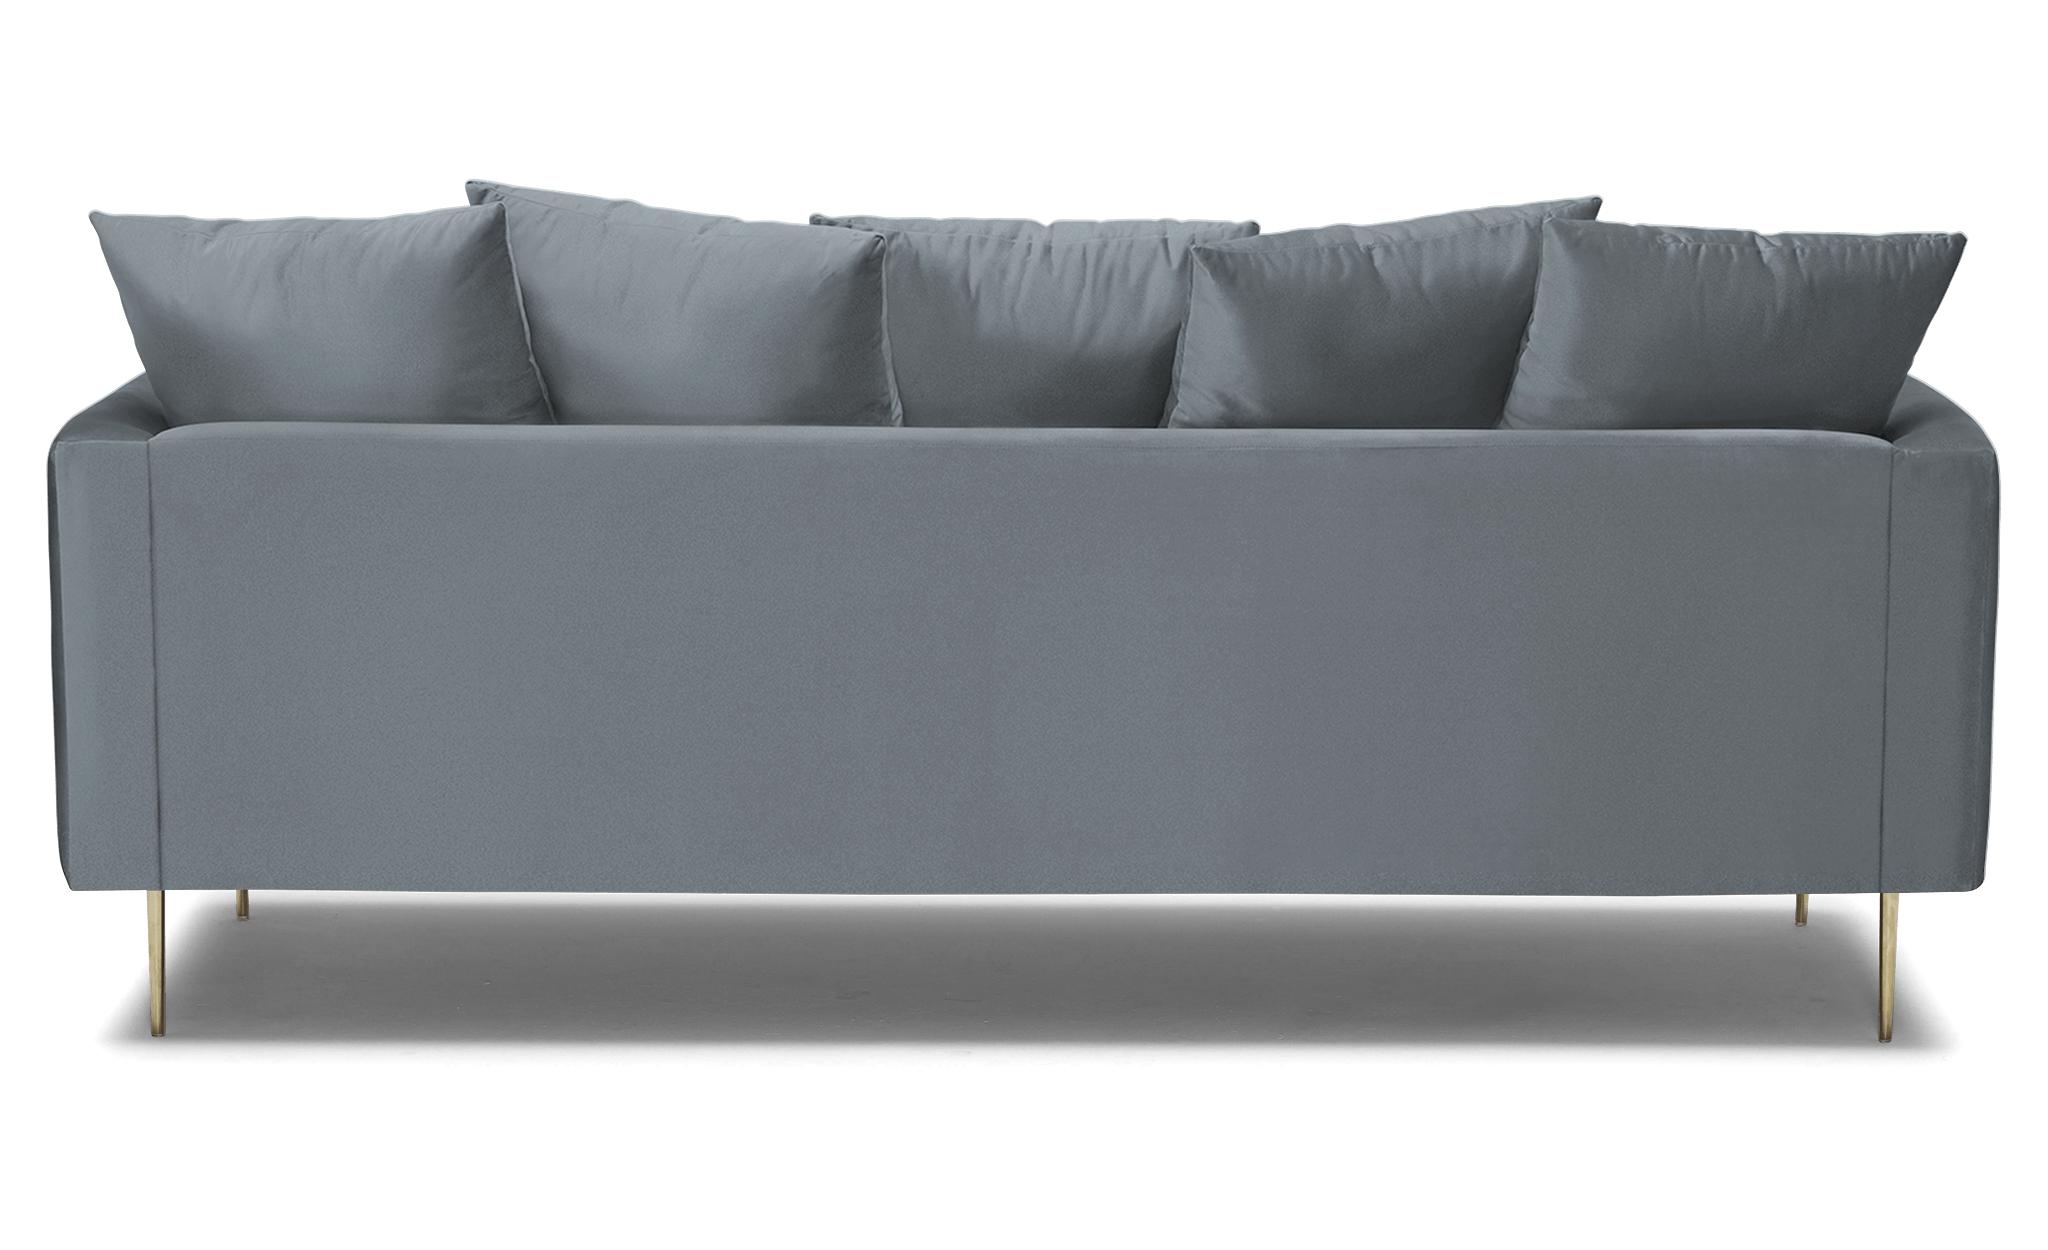 Gray Aime Mid Century Modern Sofa - Synergy Pewter - Image 4